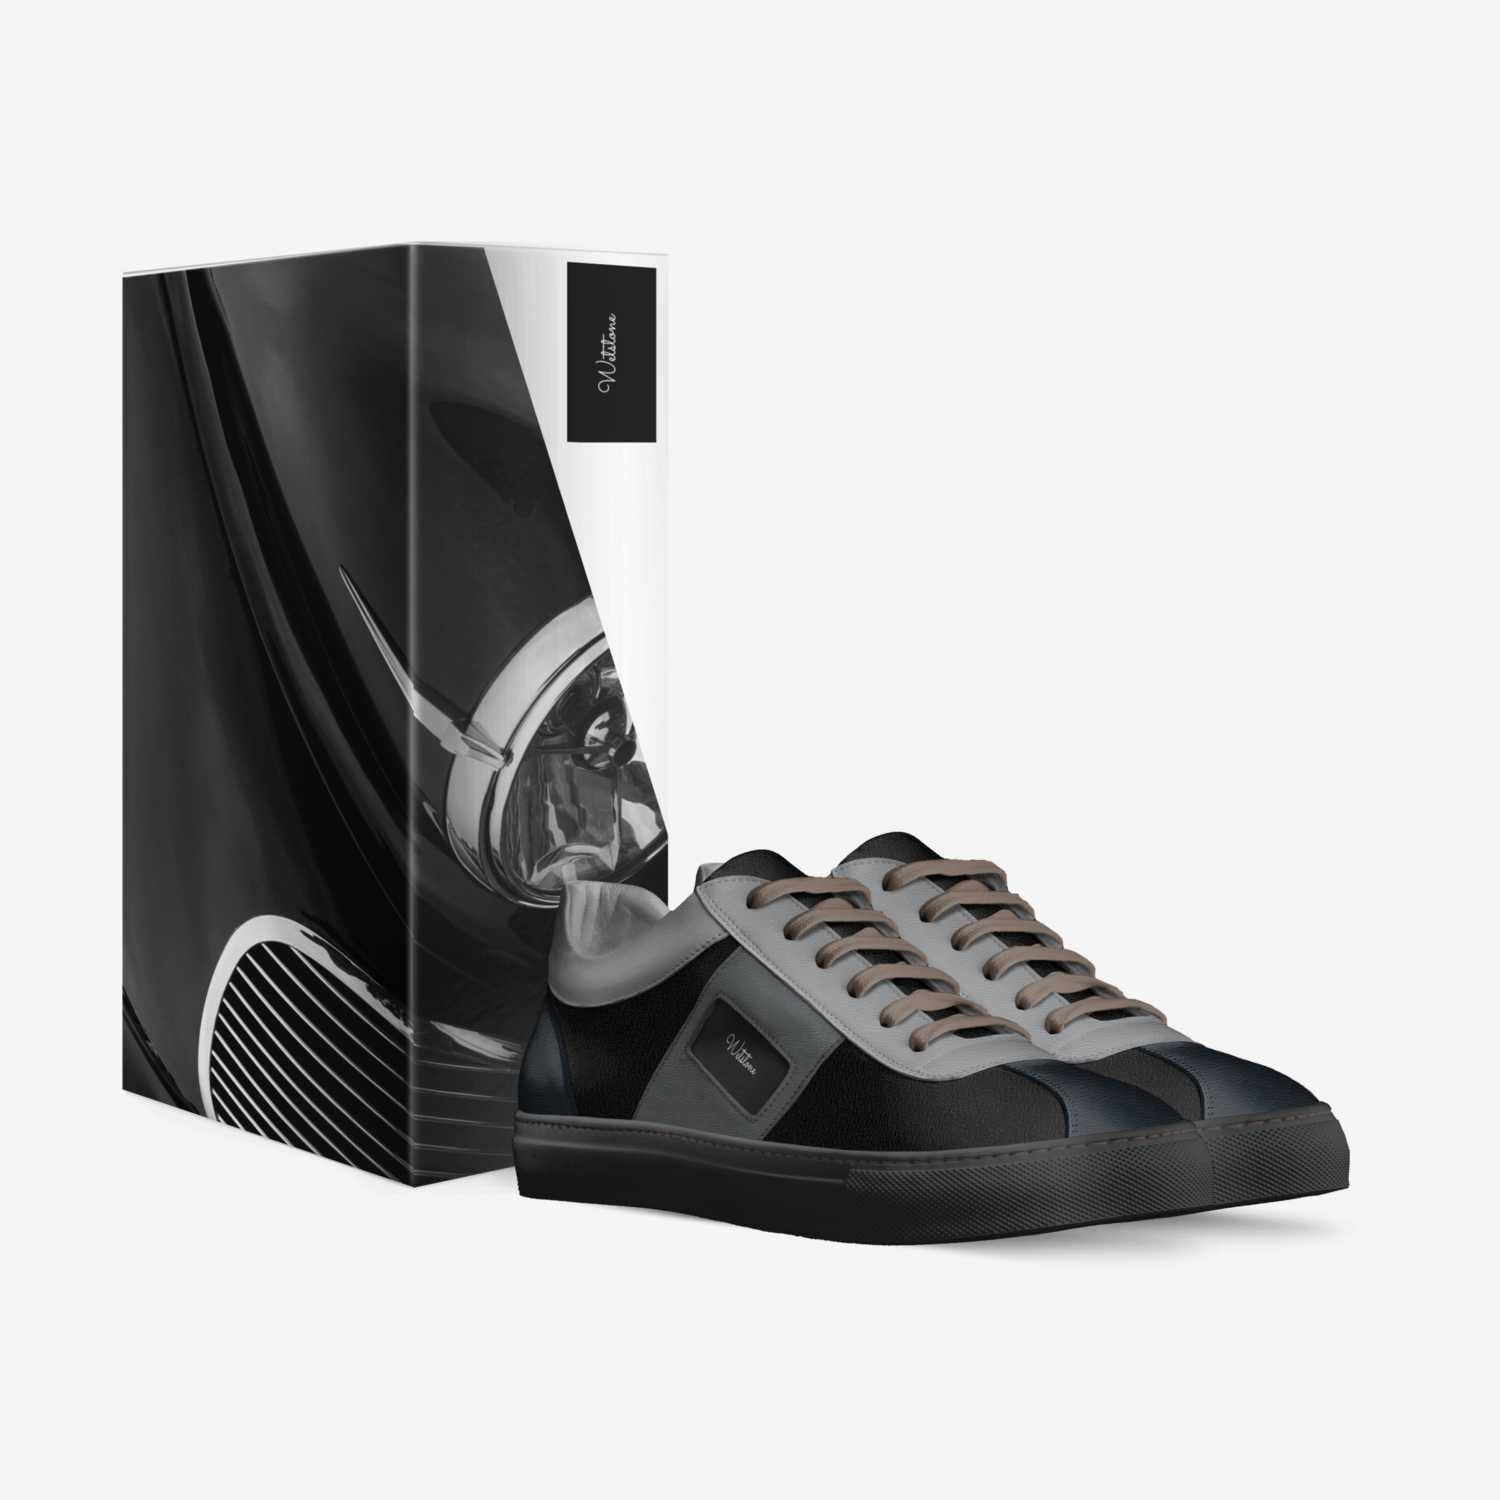 Wetstone custom made in Italy shoes by Gavin Koch Scott | Box view